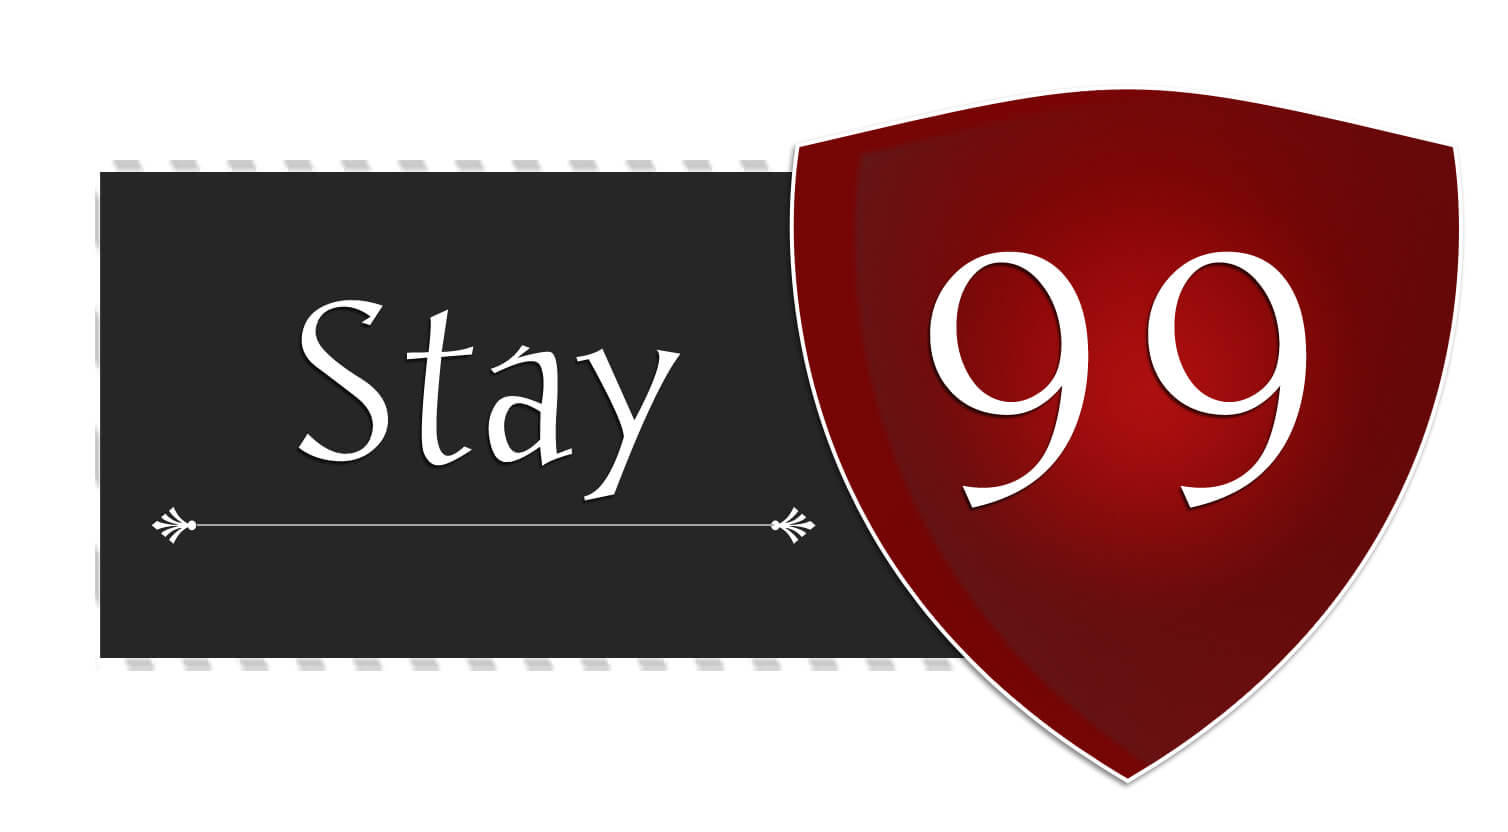 Logo Stay99